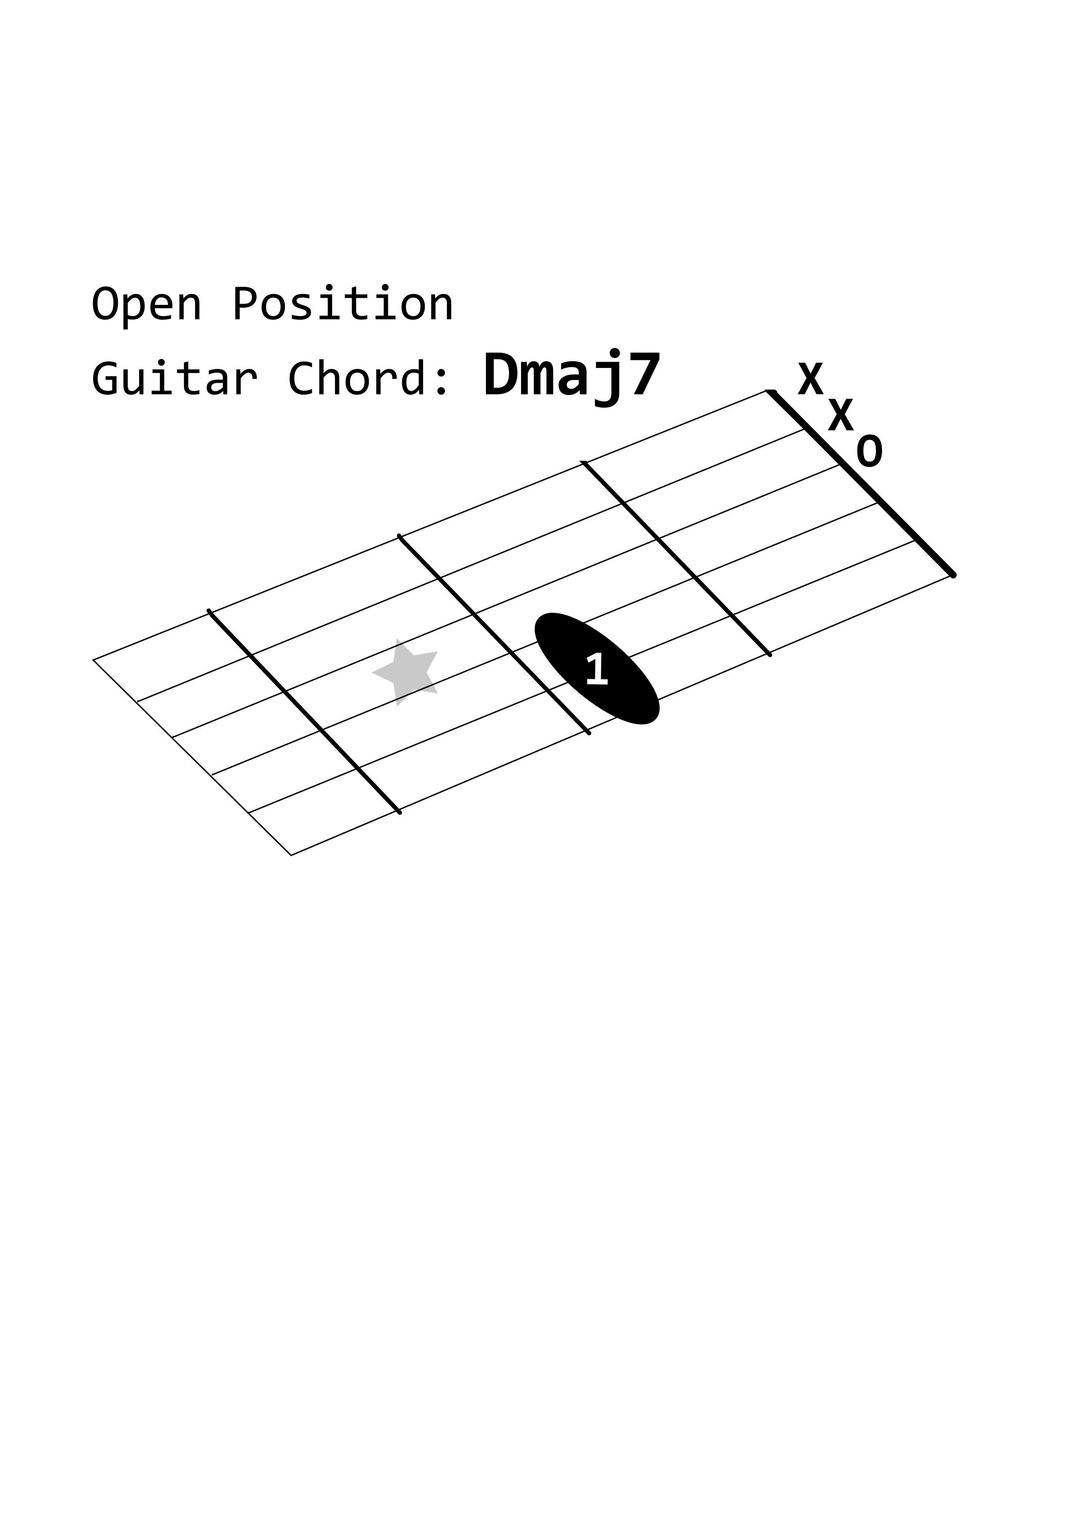 Open Position Guitar Chord: Dmaj7 png transparent